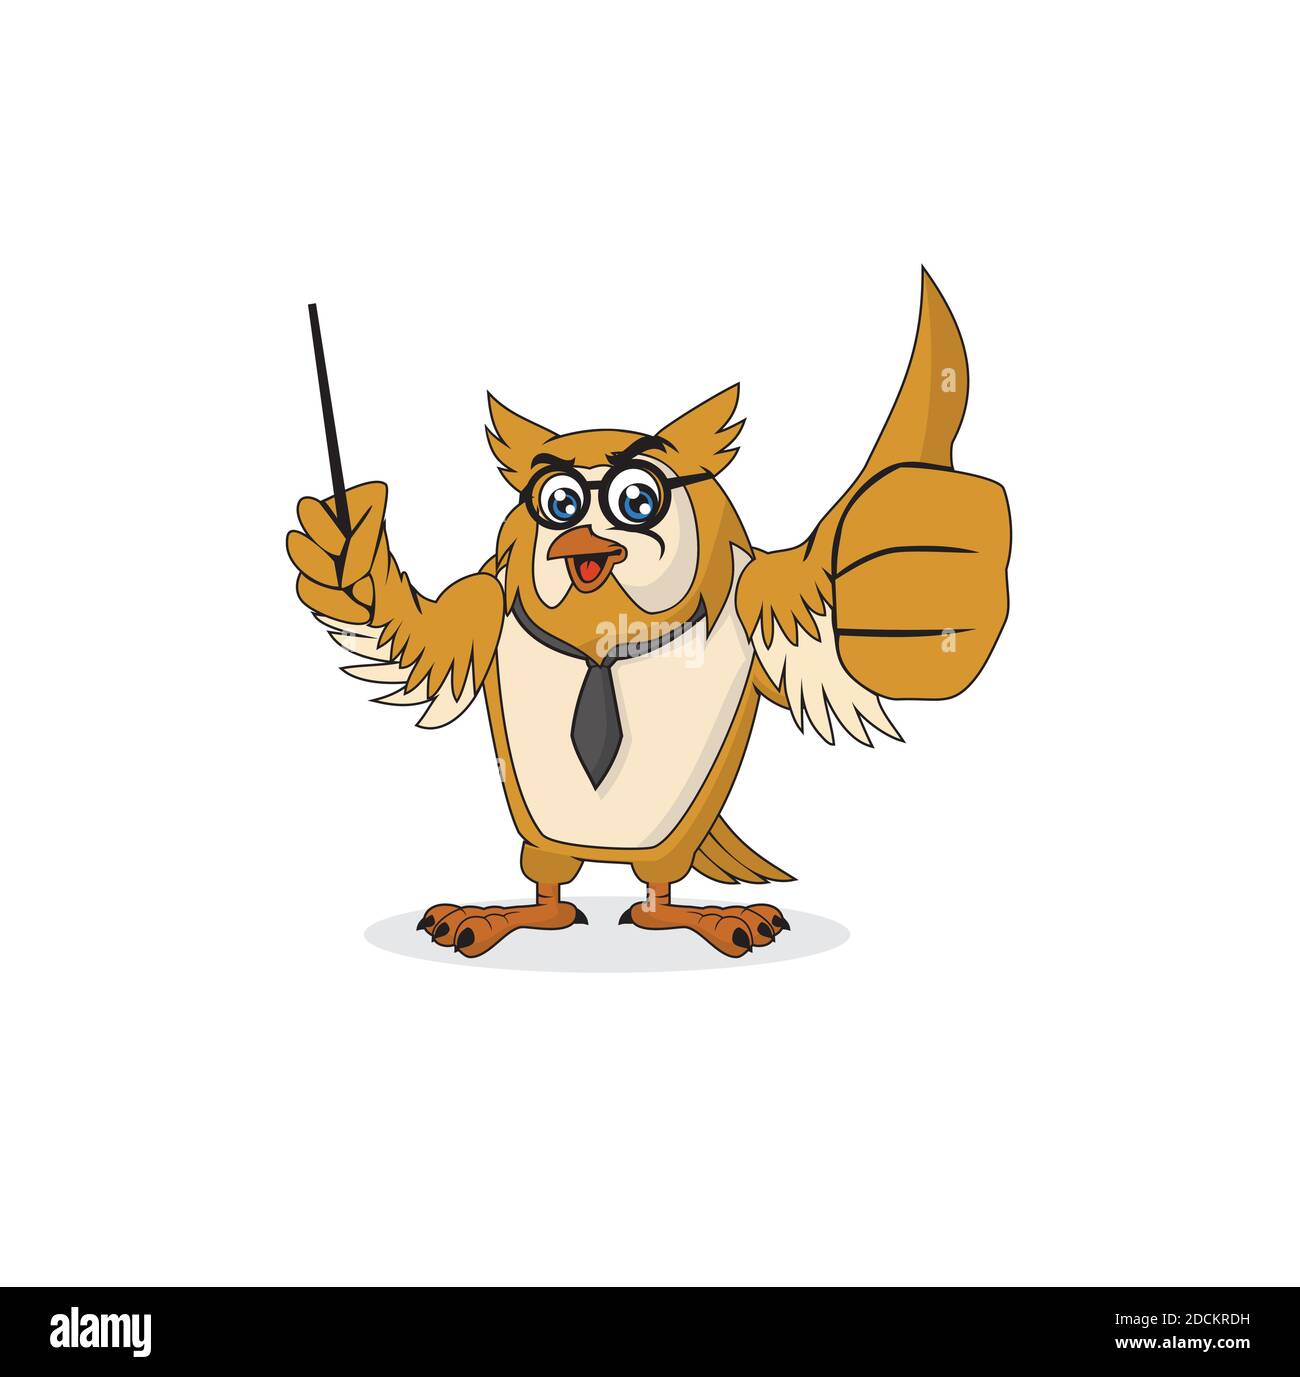 Owl teacher cartoon character design illustration vector eps format , suitable for your design needs, logo, illustration, animation, etc. Stock Vector